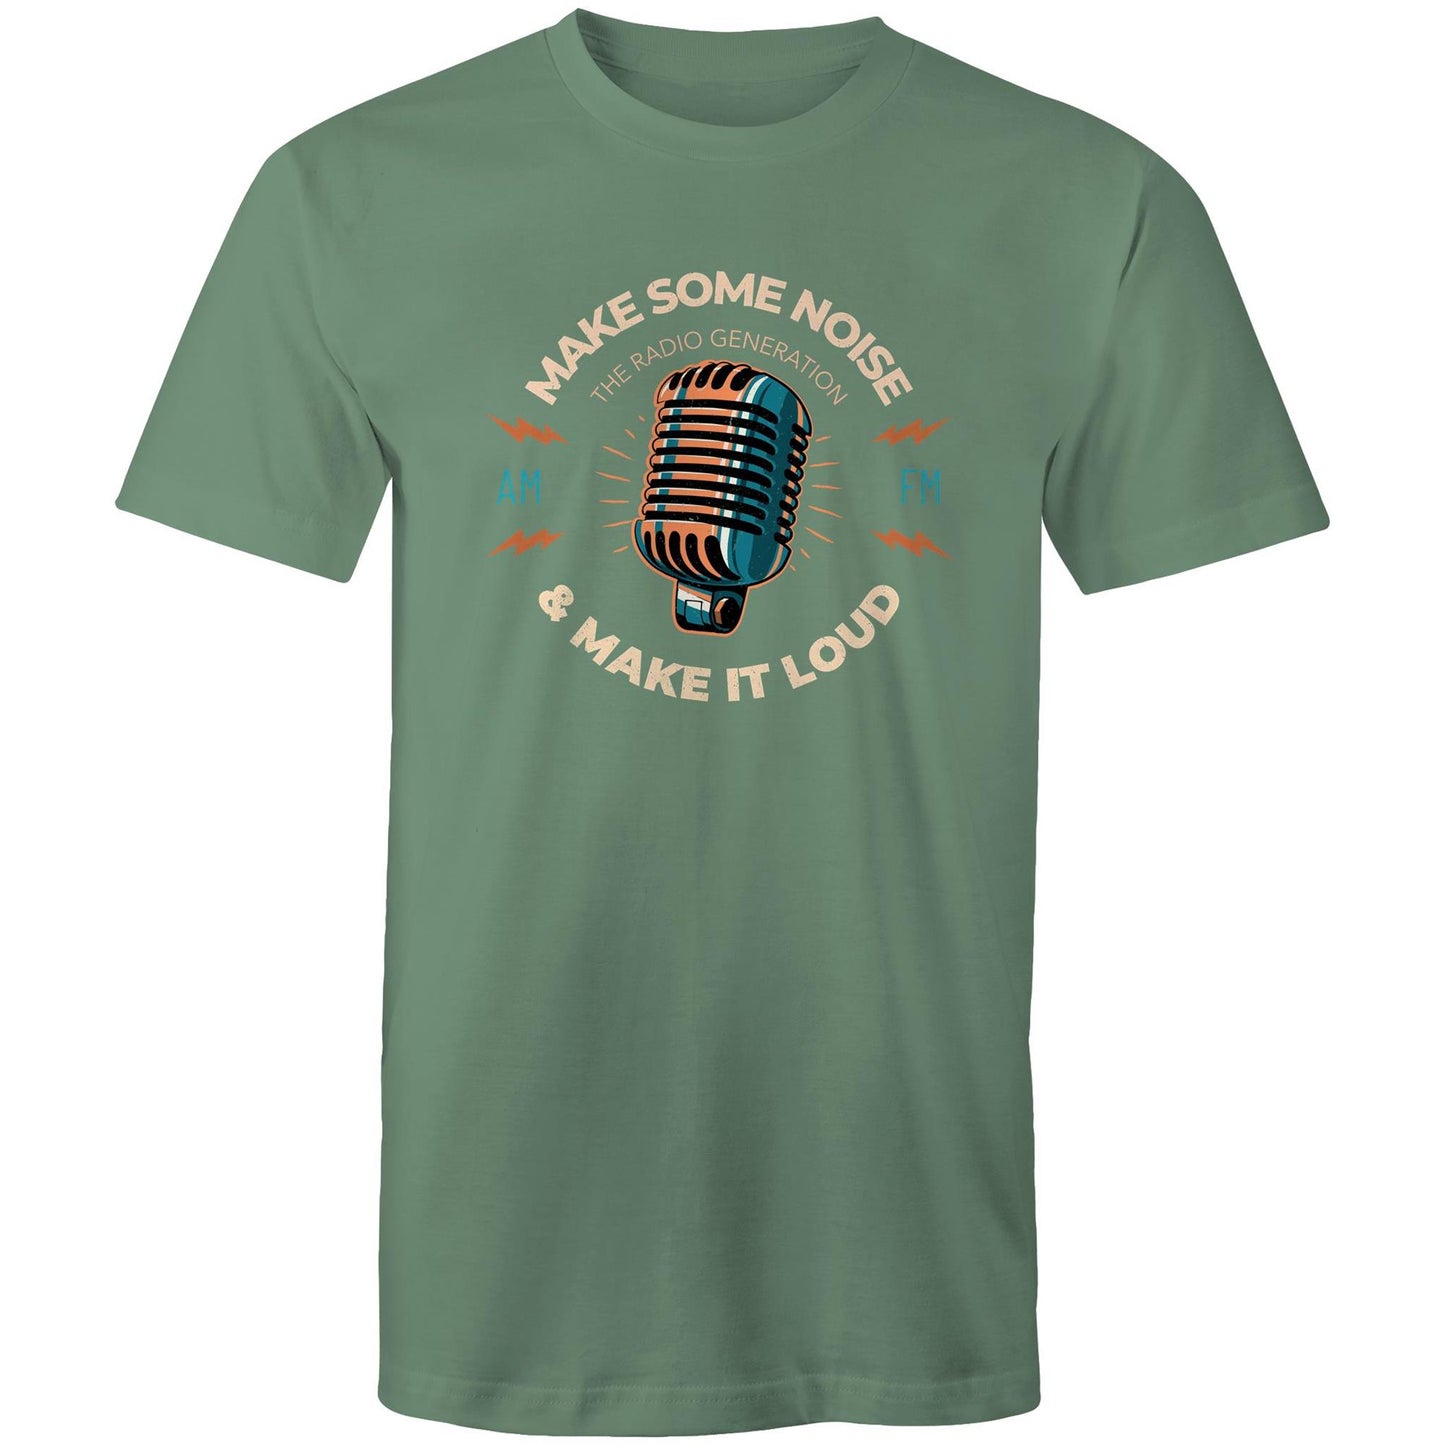 Make Some Noise And Make It Loud - Mens T-Shirt Sage Mens T-shirt Music